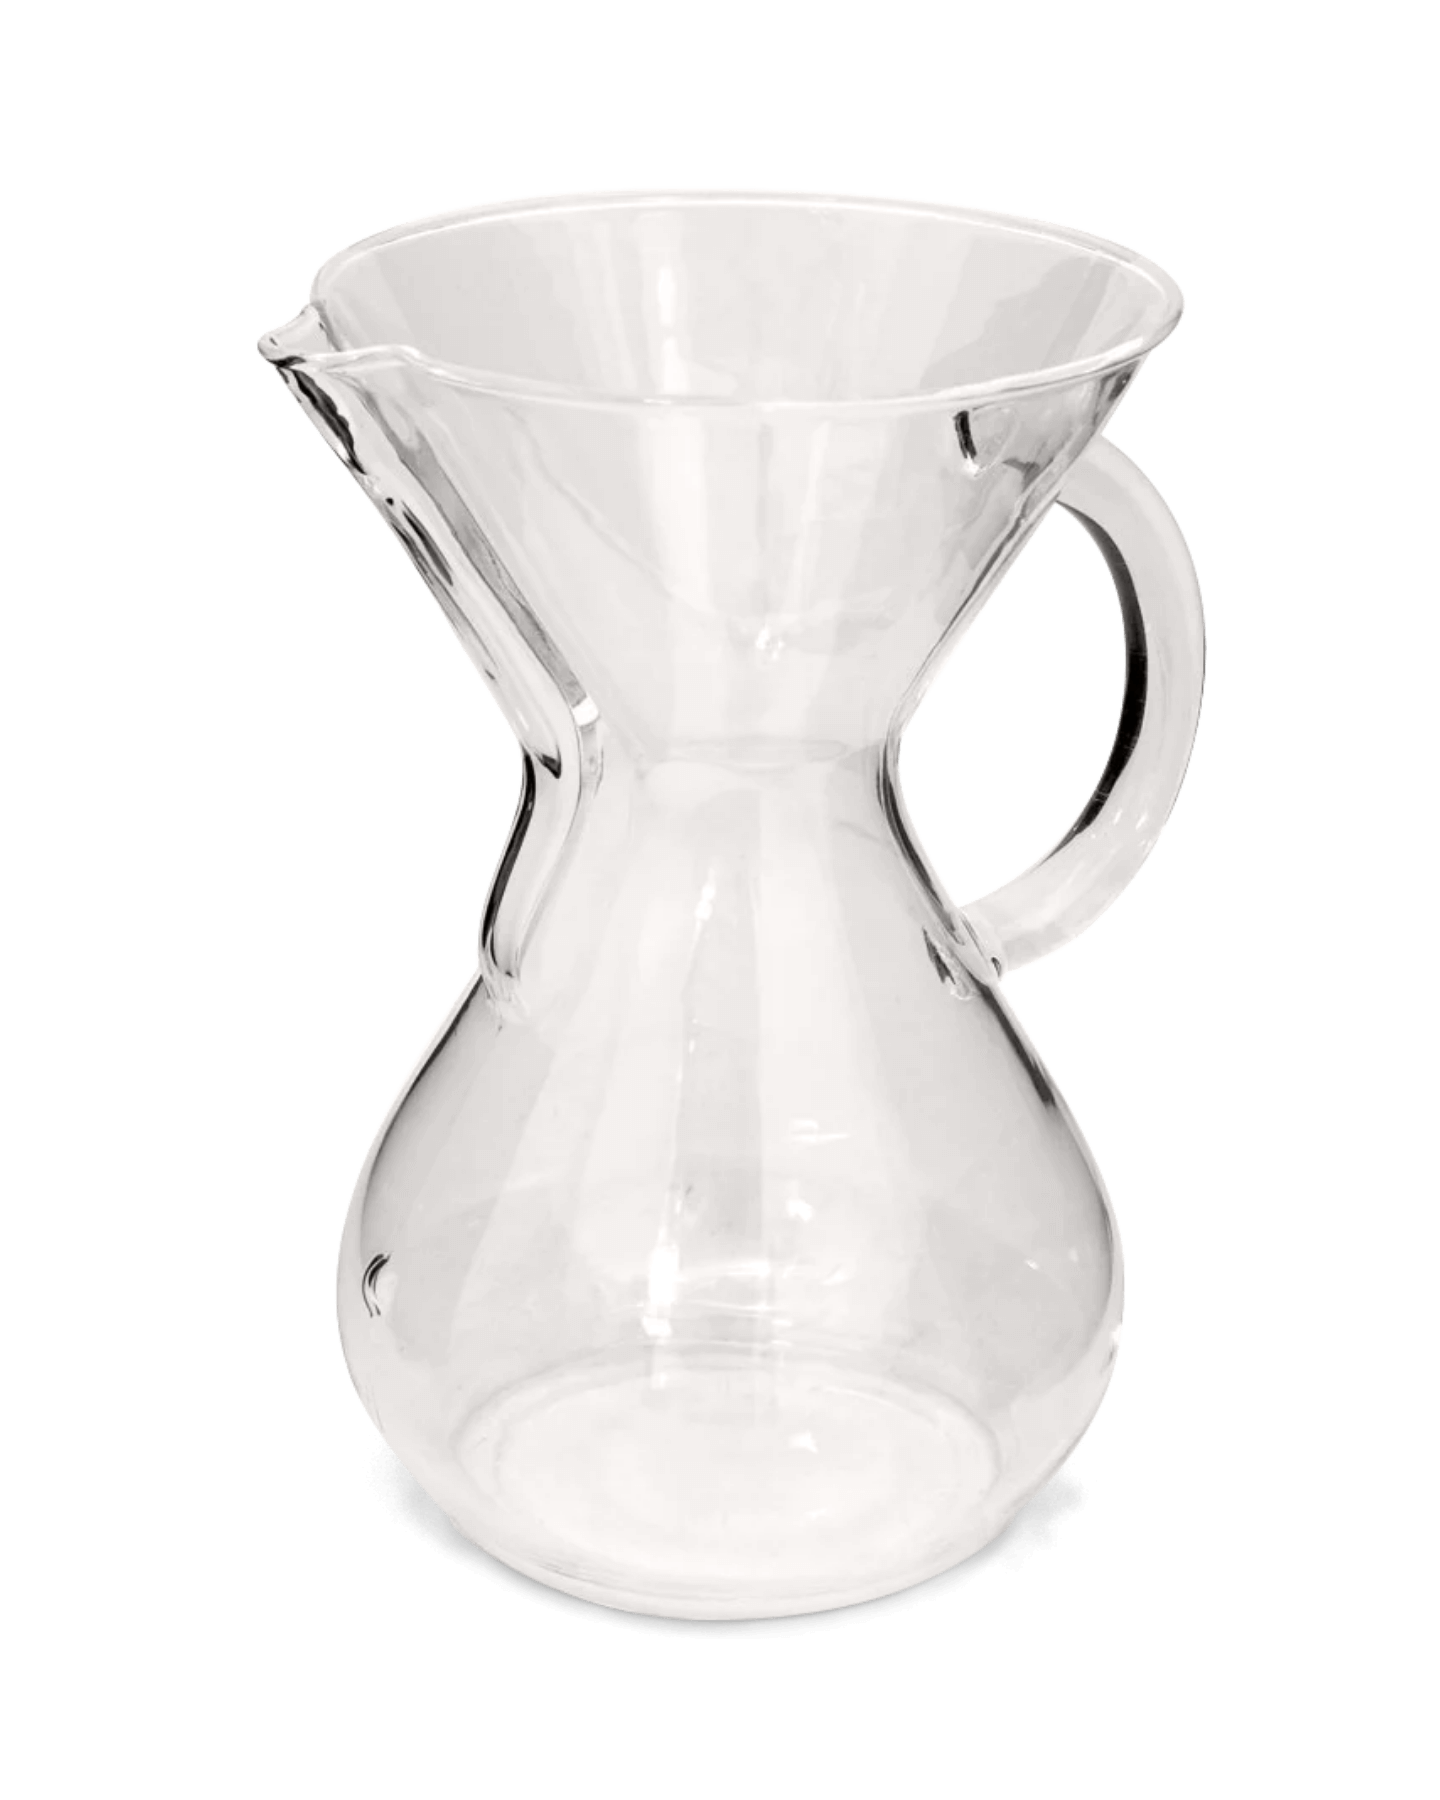 Chemex 8-Cup Glass Handle Coffee Maker